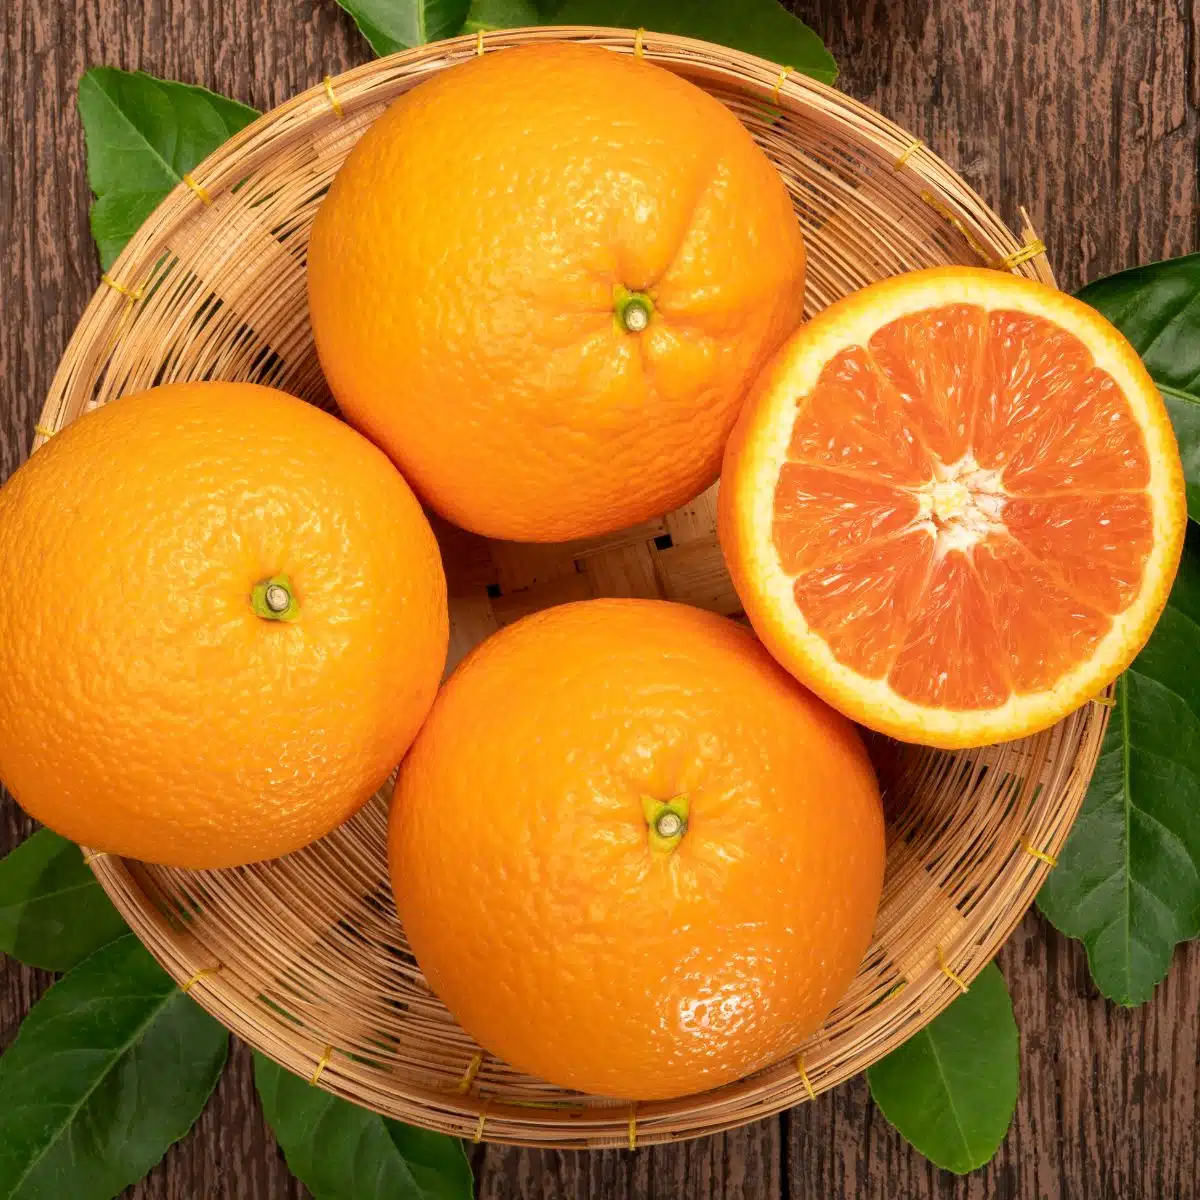 Cara Cara oranges with one cut in half. 